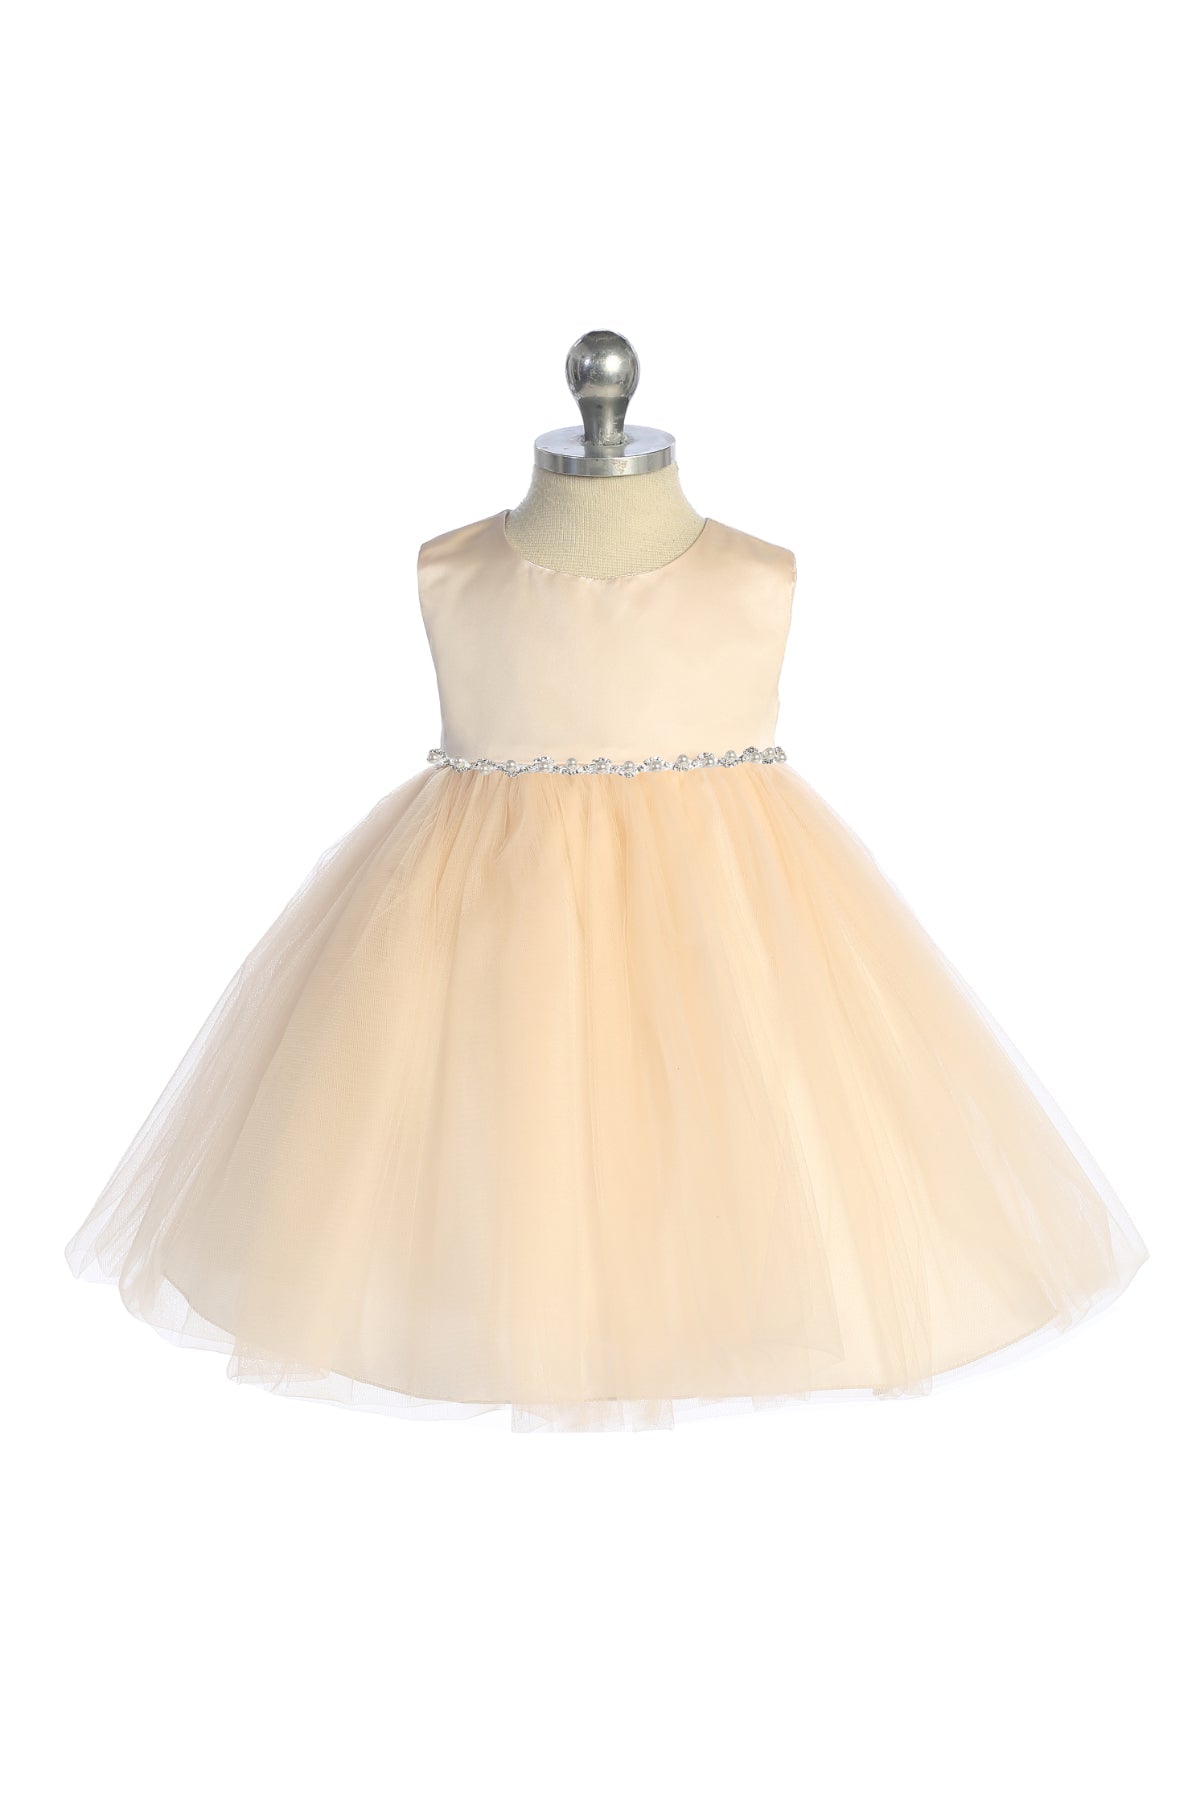 540-G-Satin Top Baby Dress w/ Rhinestones & Pearls